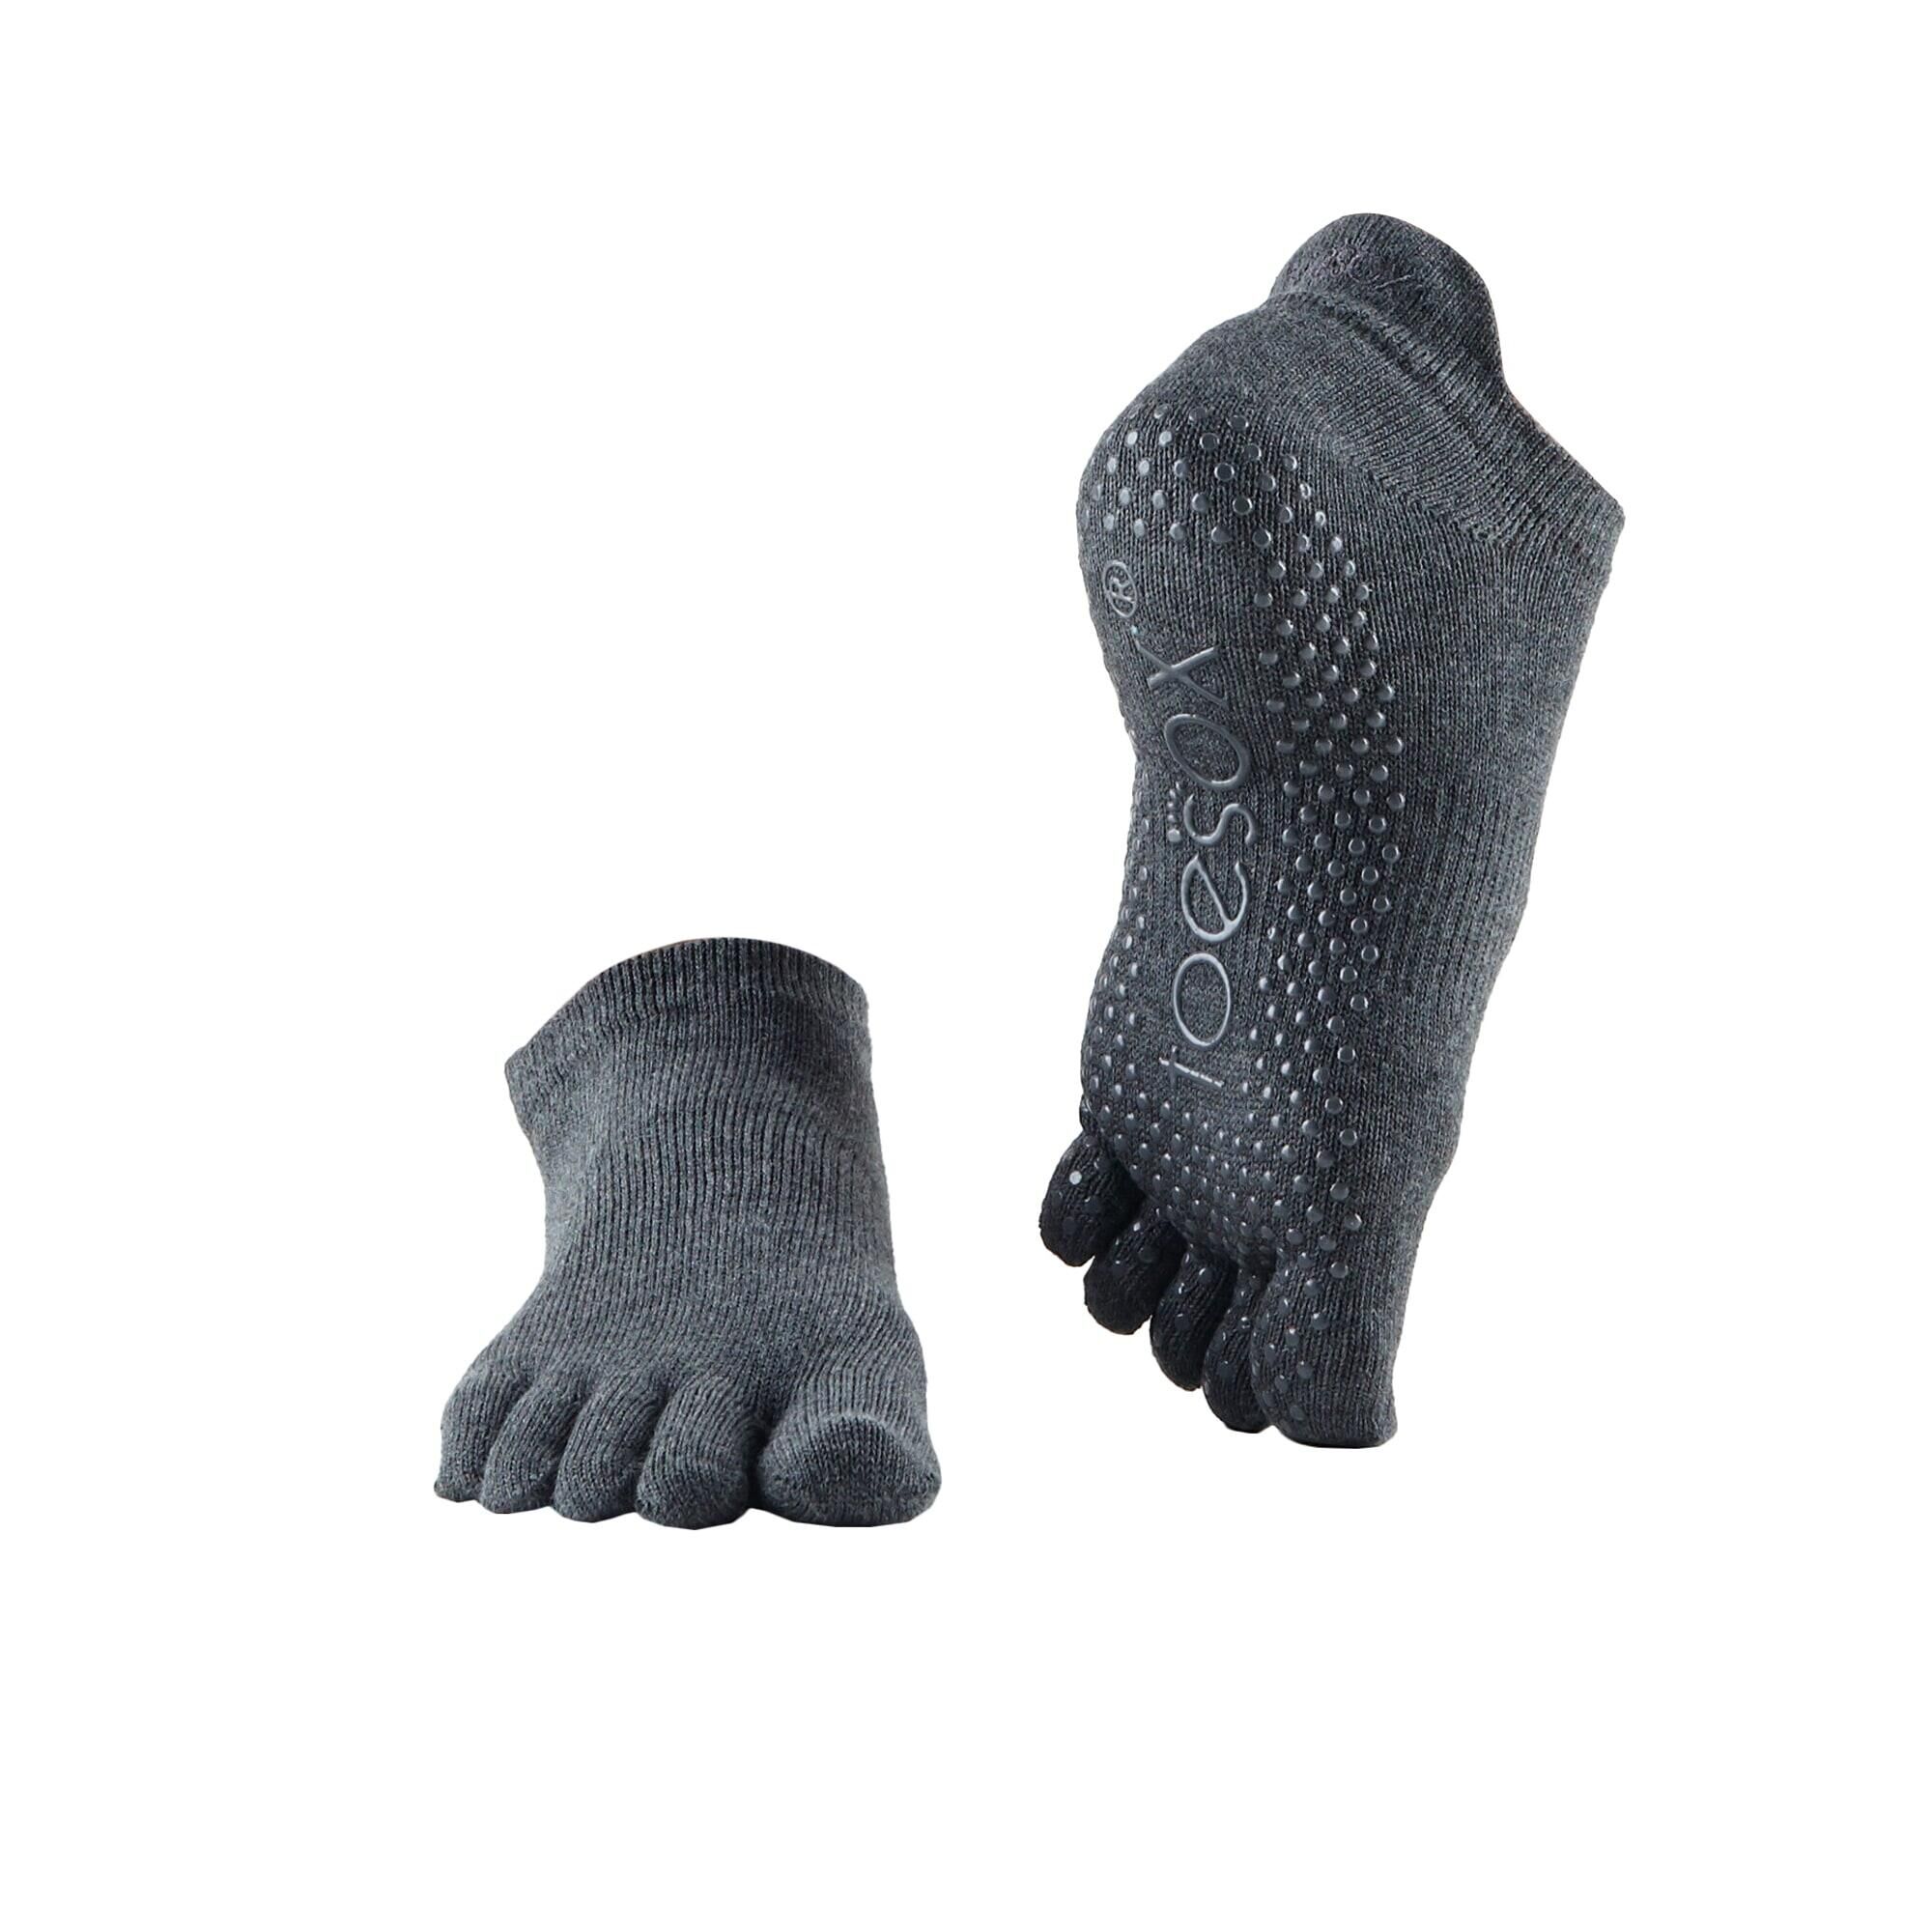 FITNESS-MAD Womens/Ladies Low Rise Toe Socks (Charcoal Grey)